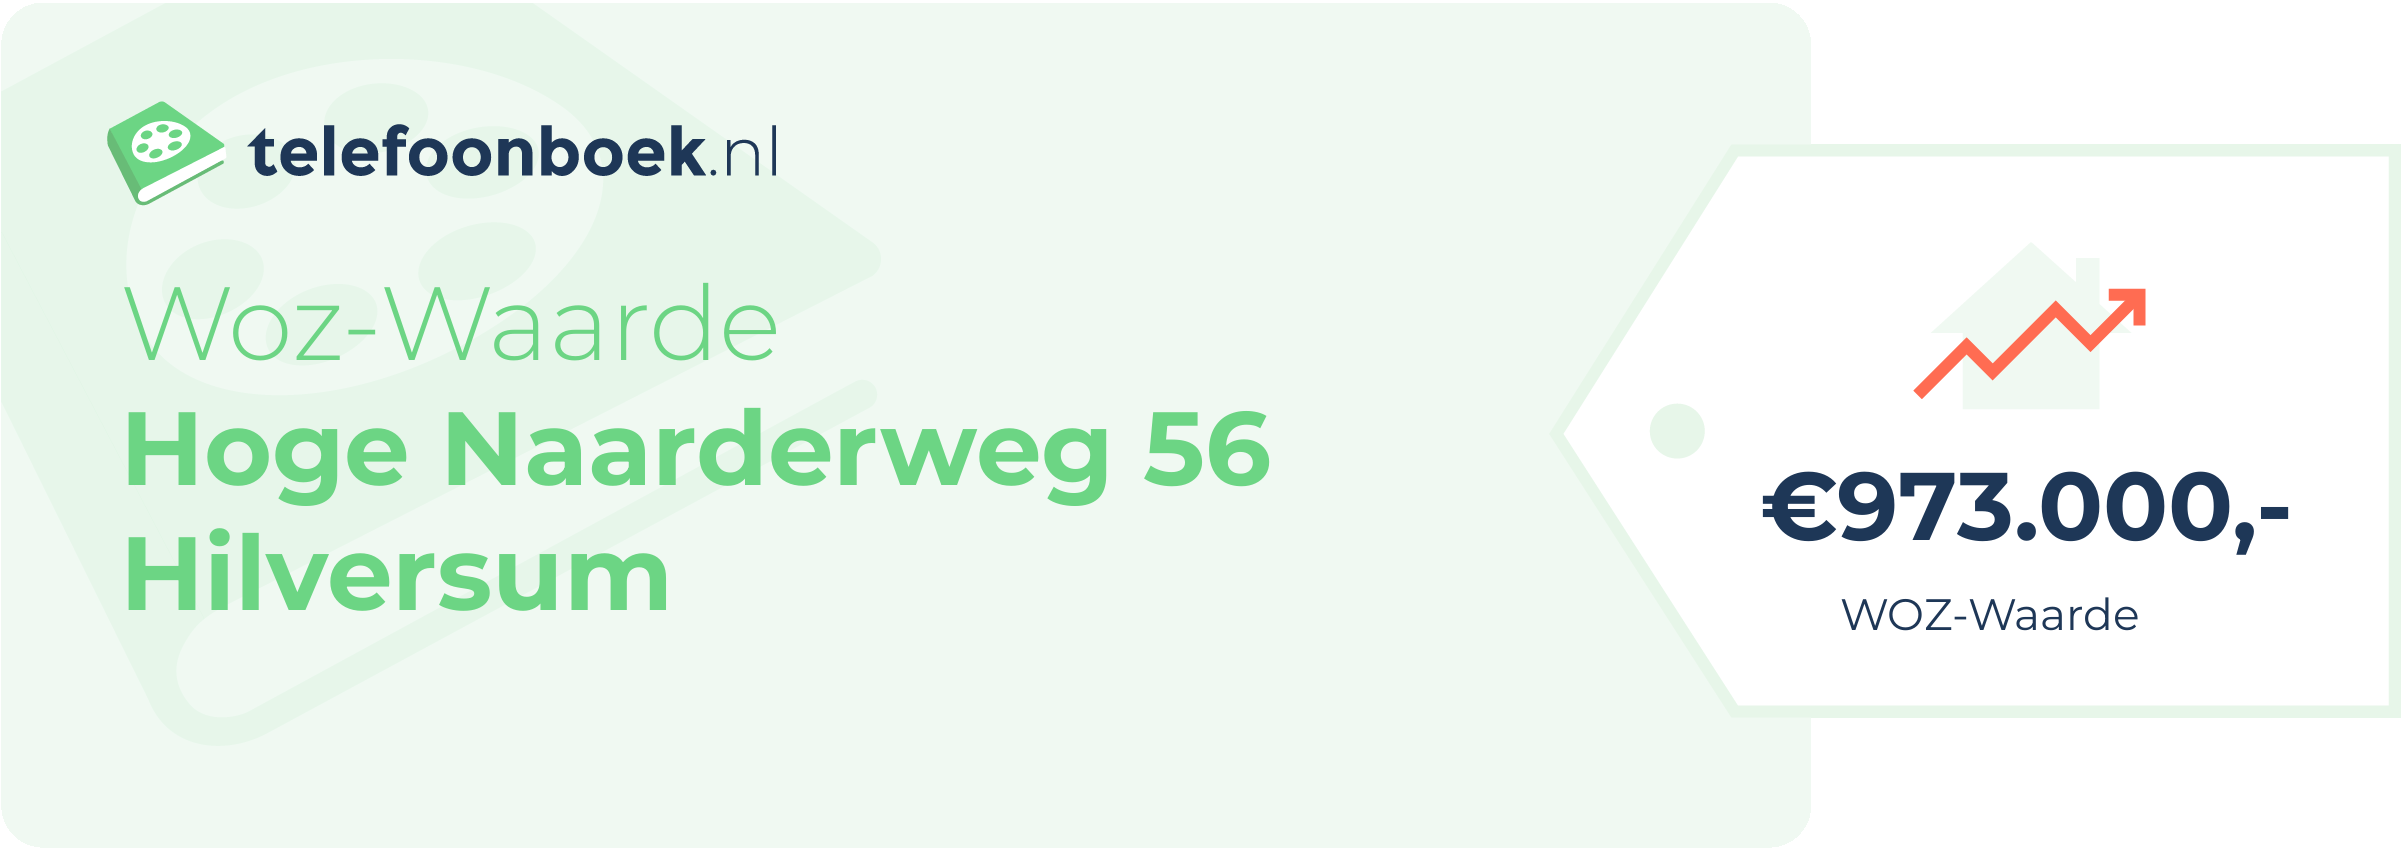 WOZ-waarde Hoge Naarderweg 56 Hilversum